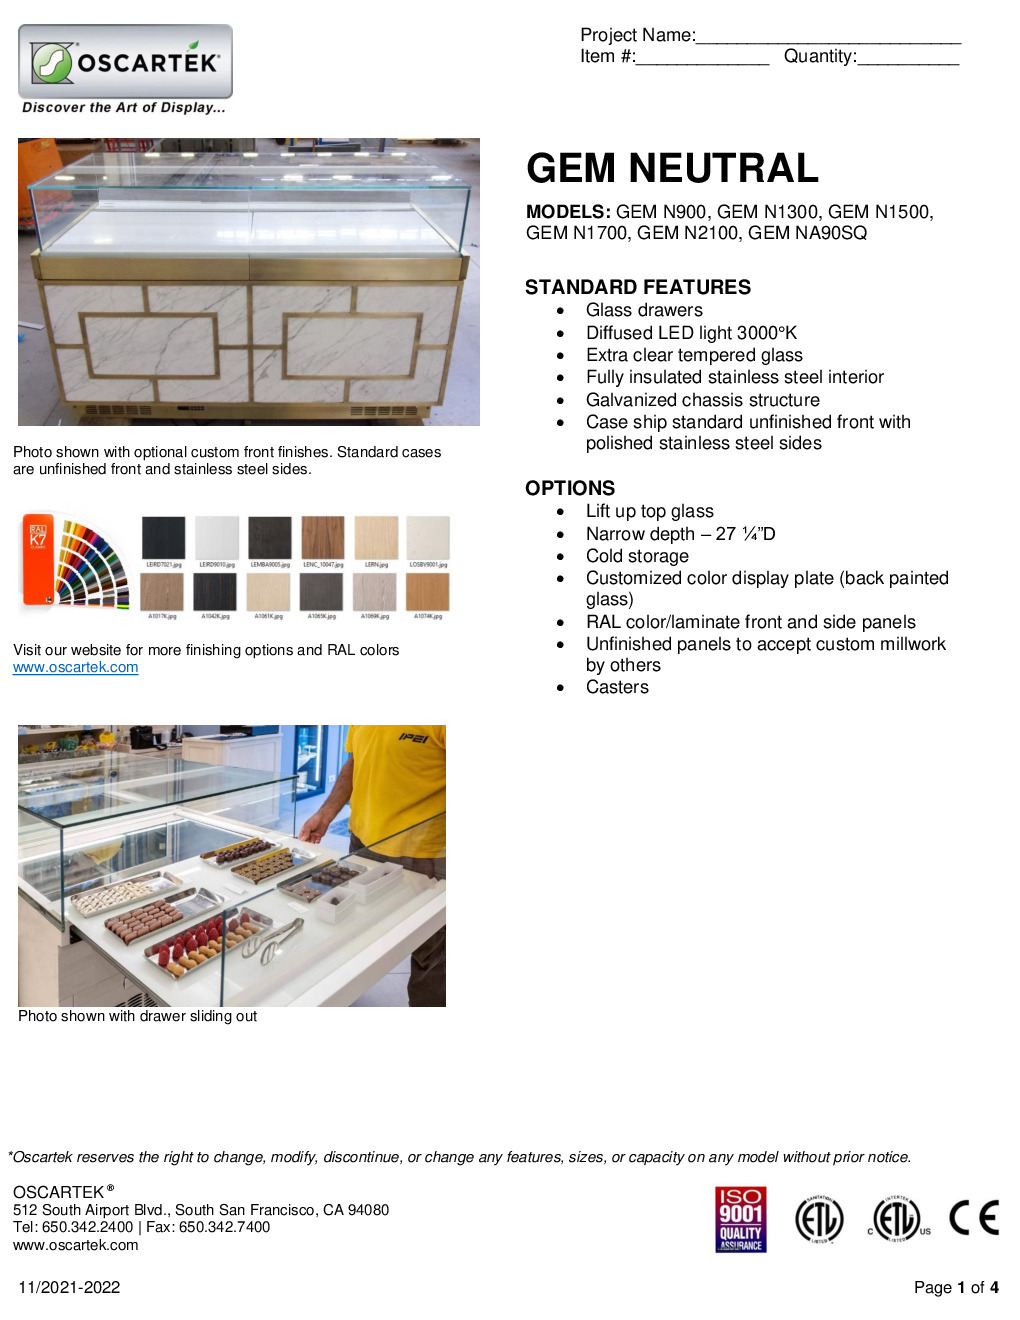 Oscartek GEM N1300 Non-Refrigerated Bakery Display Case